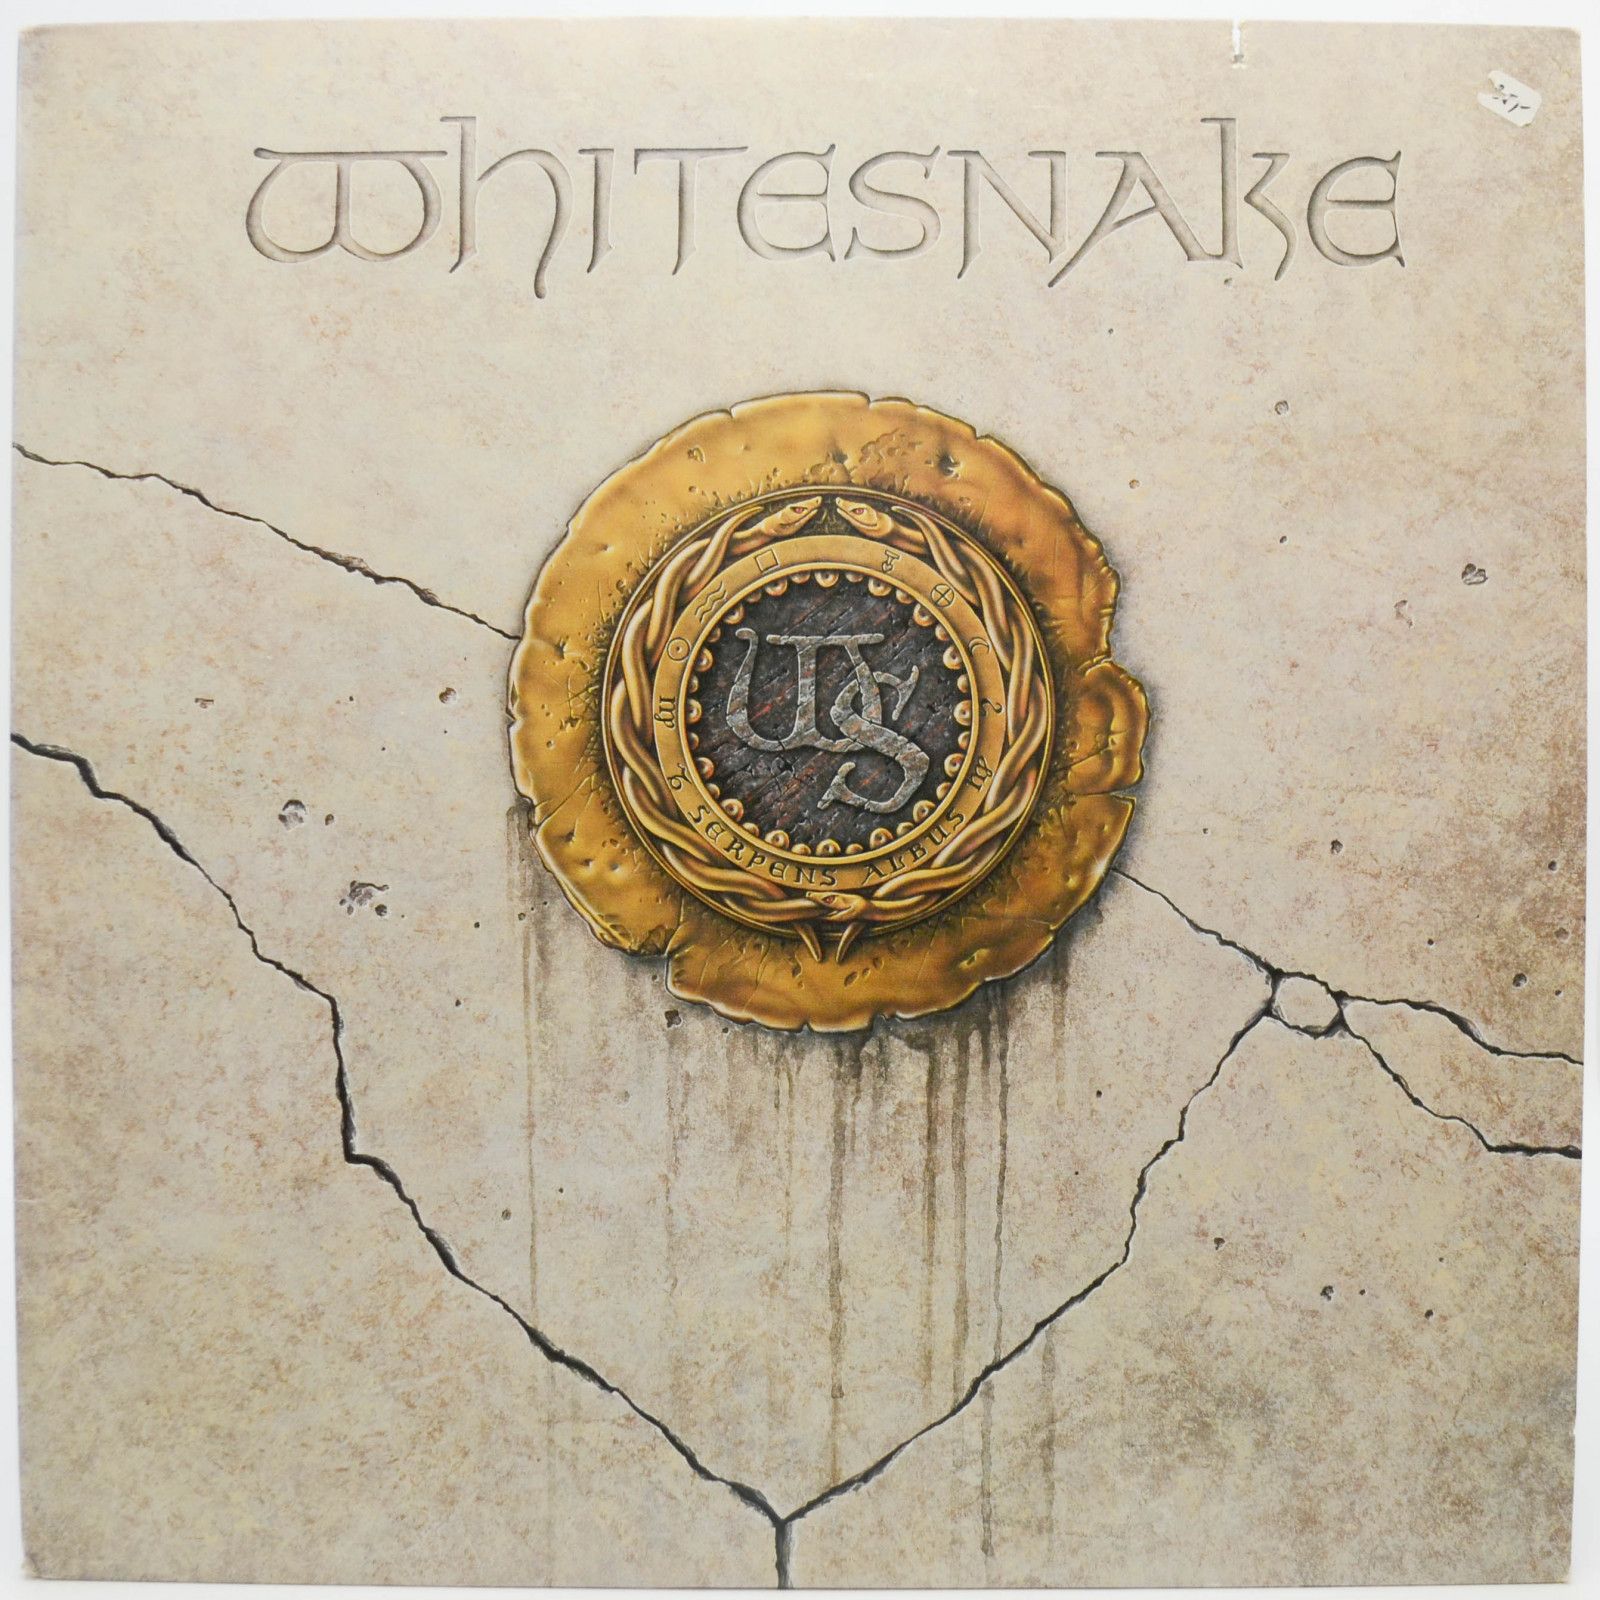 Whitesnake — Whitesnake (USA), 1987